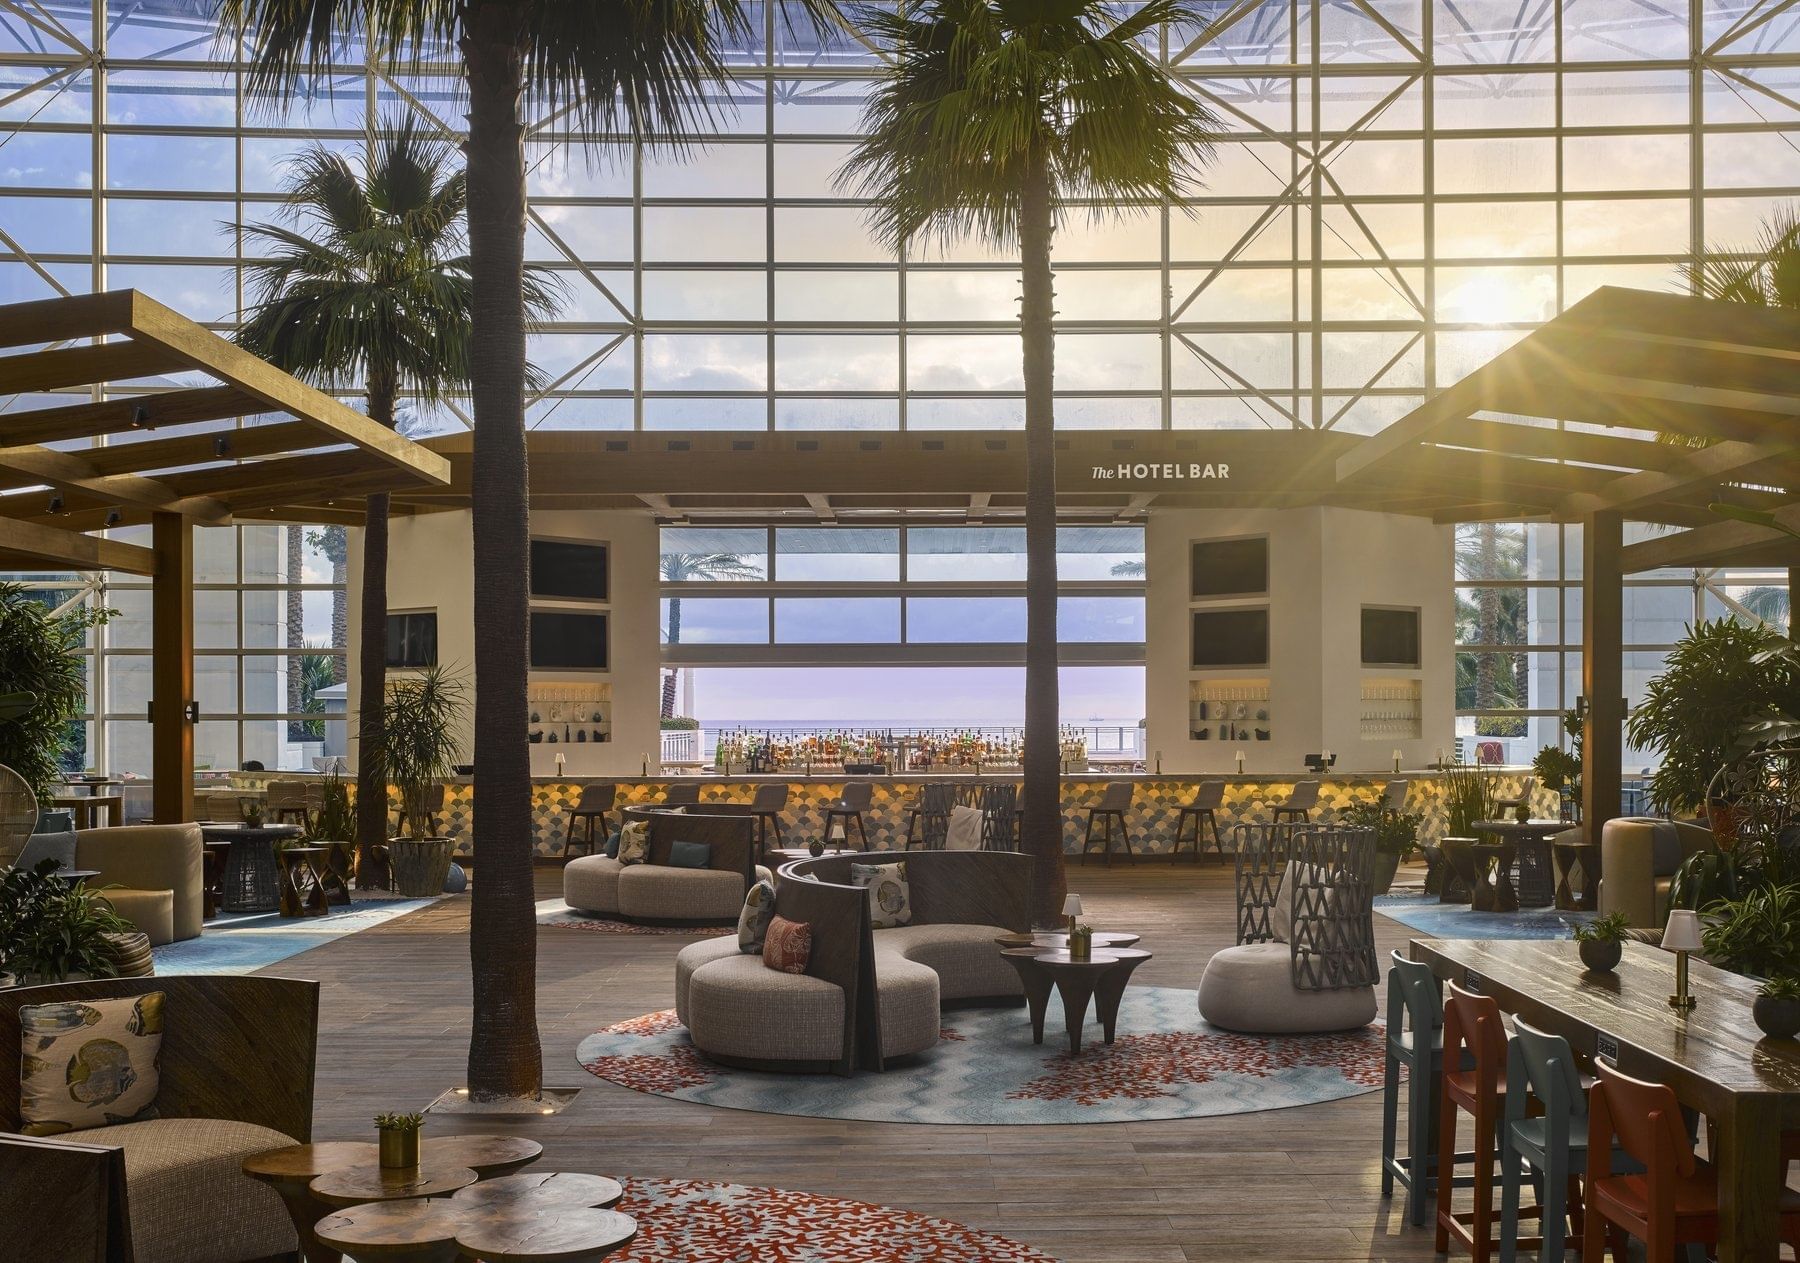 Interior of the Hotel Bar Lounge area at Diplomat Beach Resort 